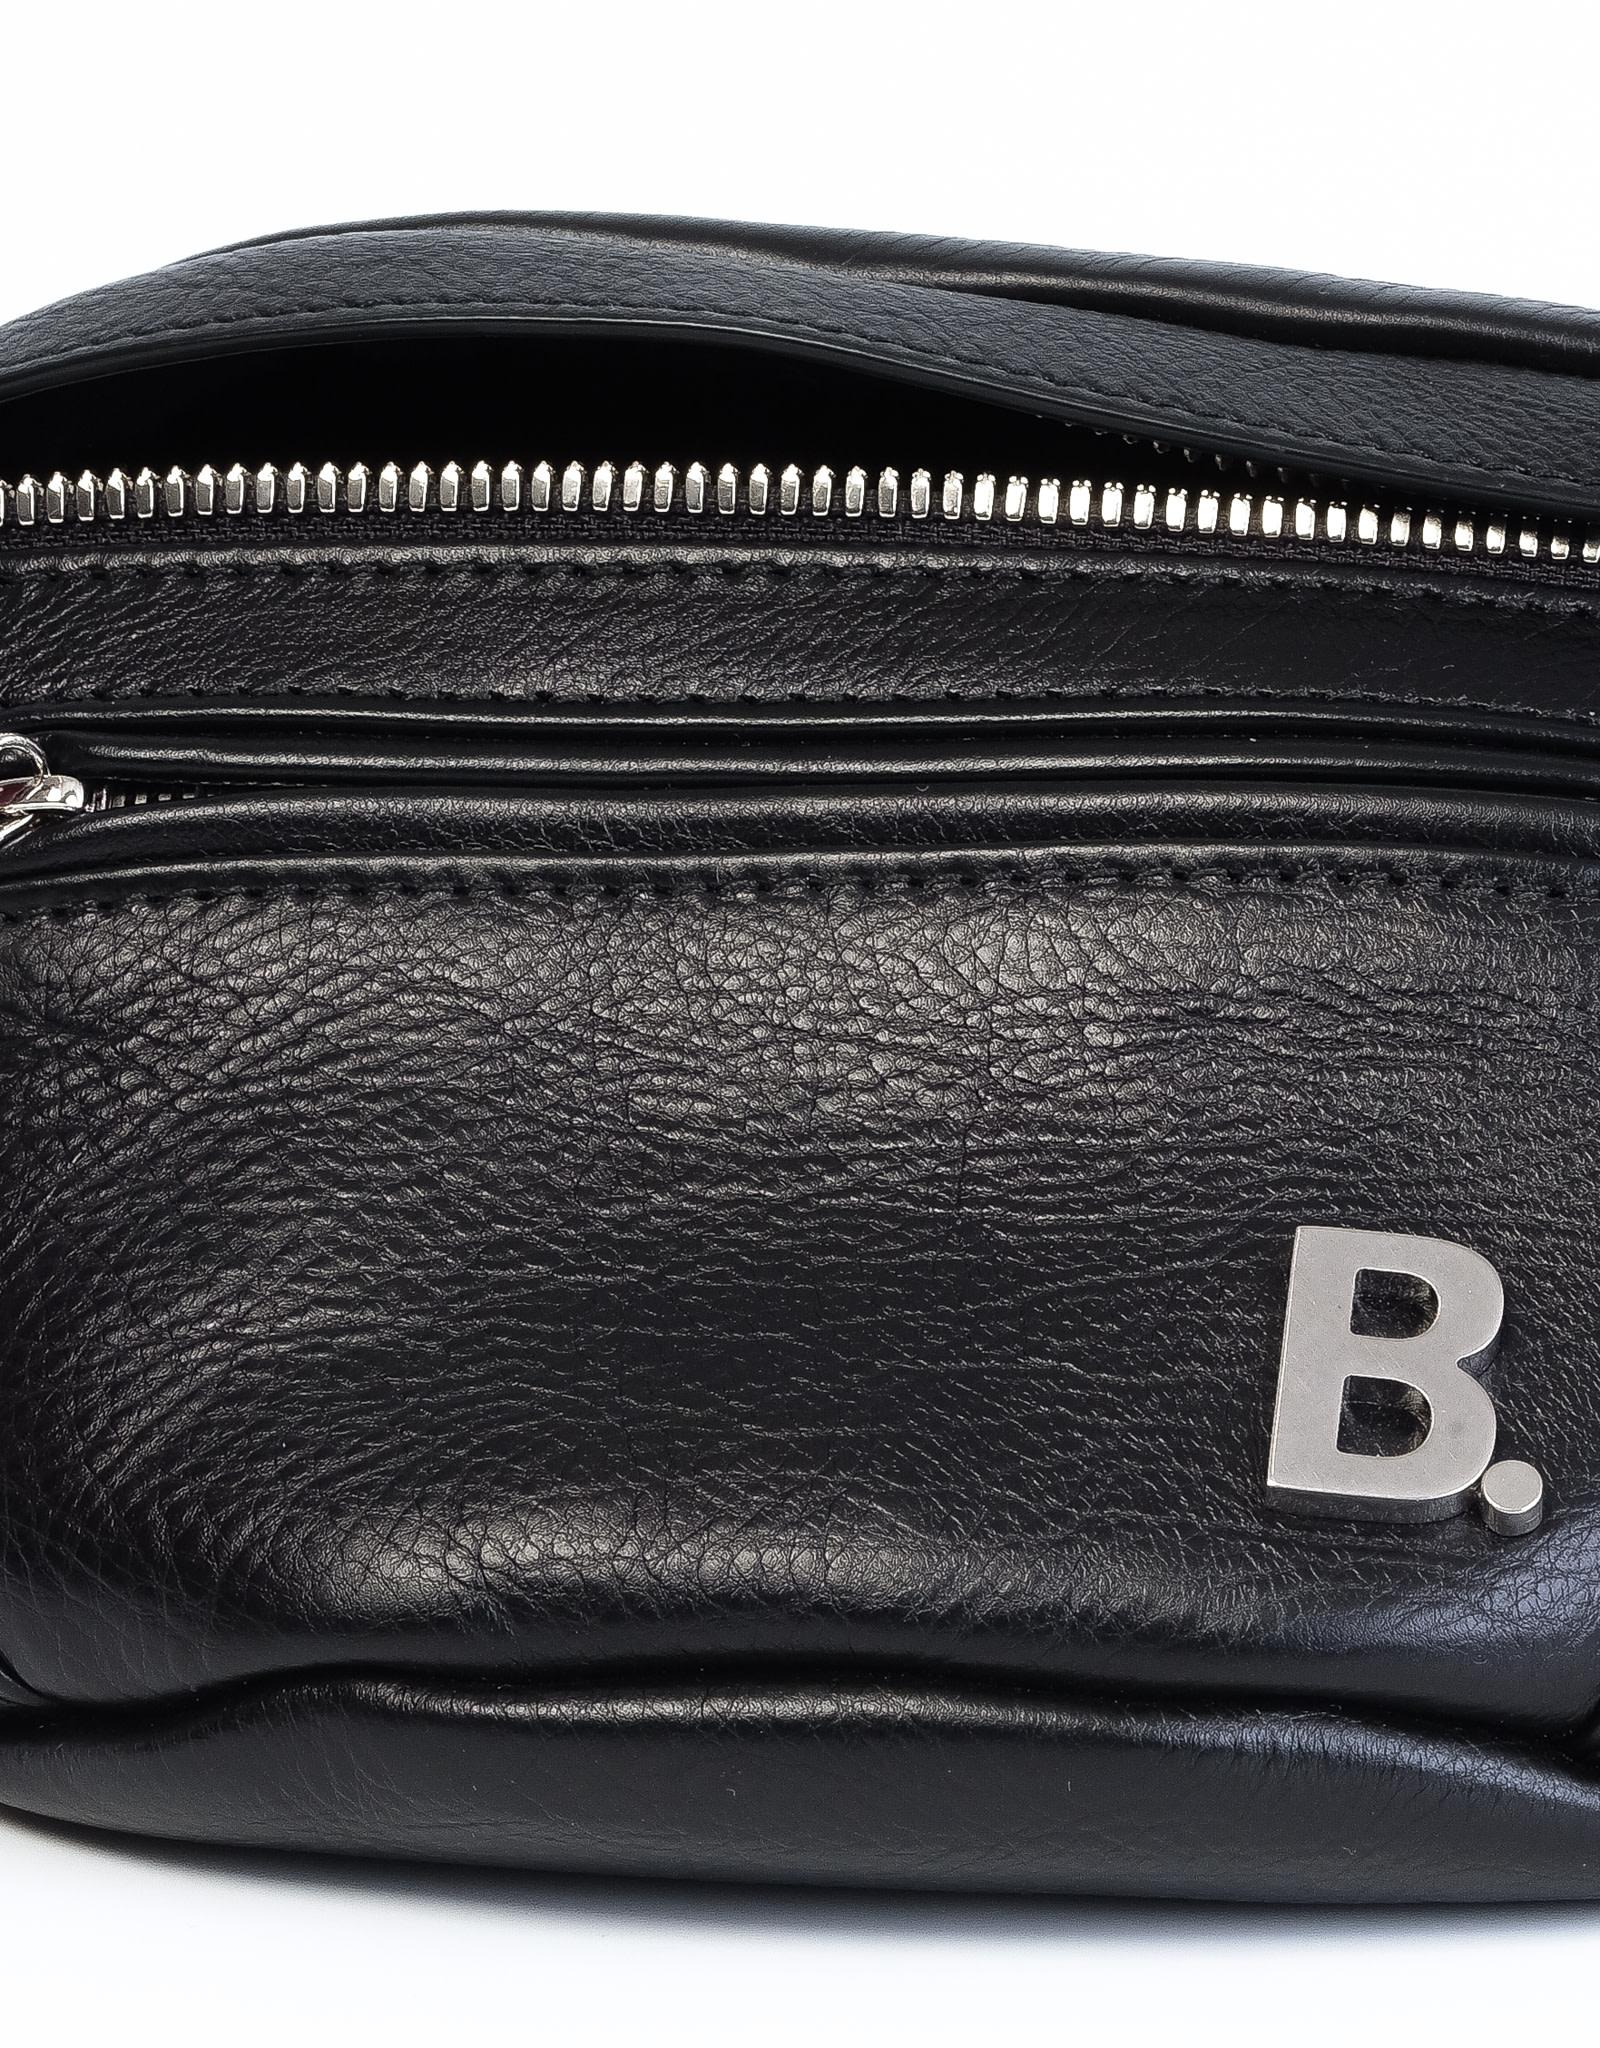 Balenciaga B Logo Plaque Bag Black For Sale 3